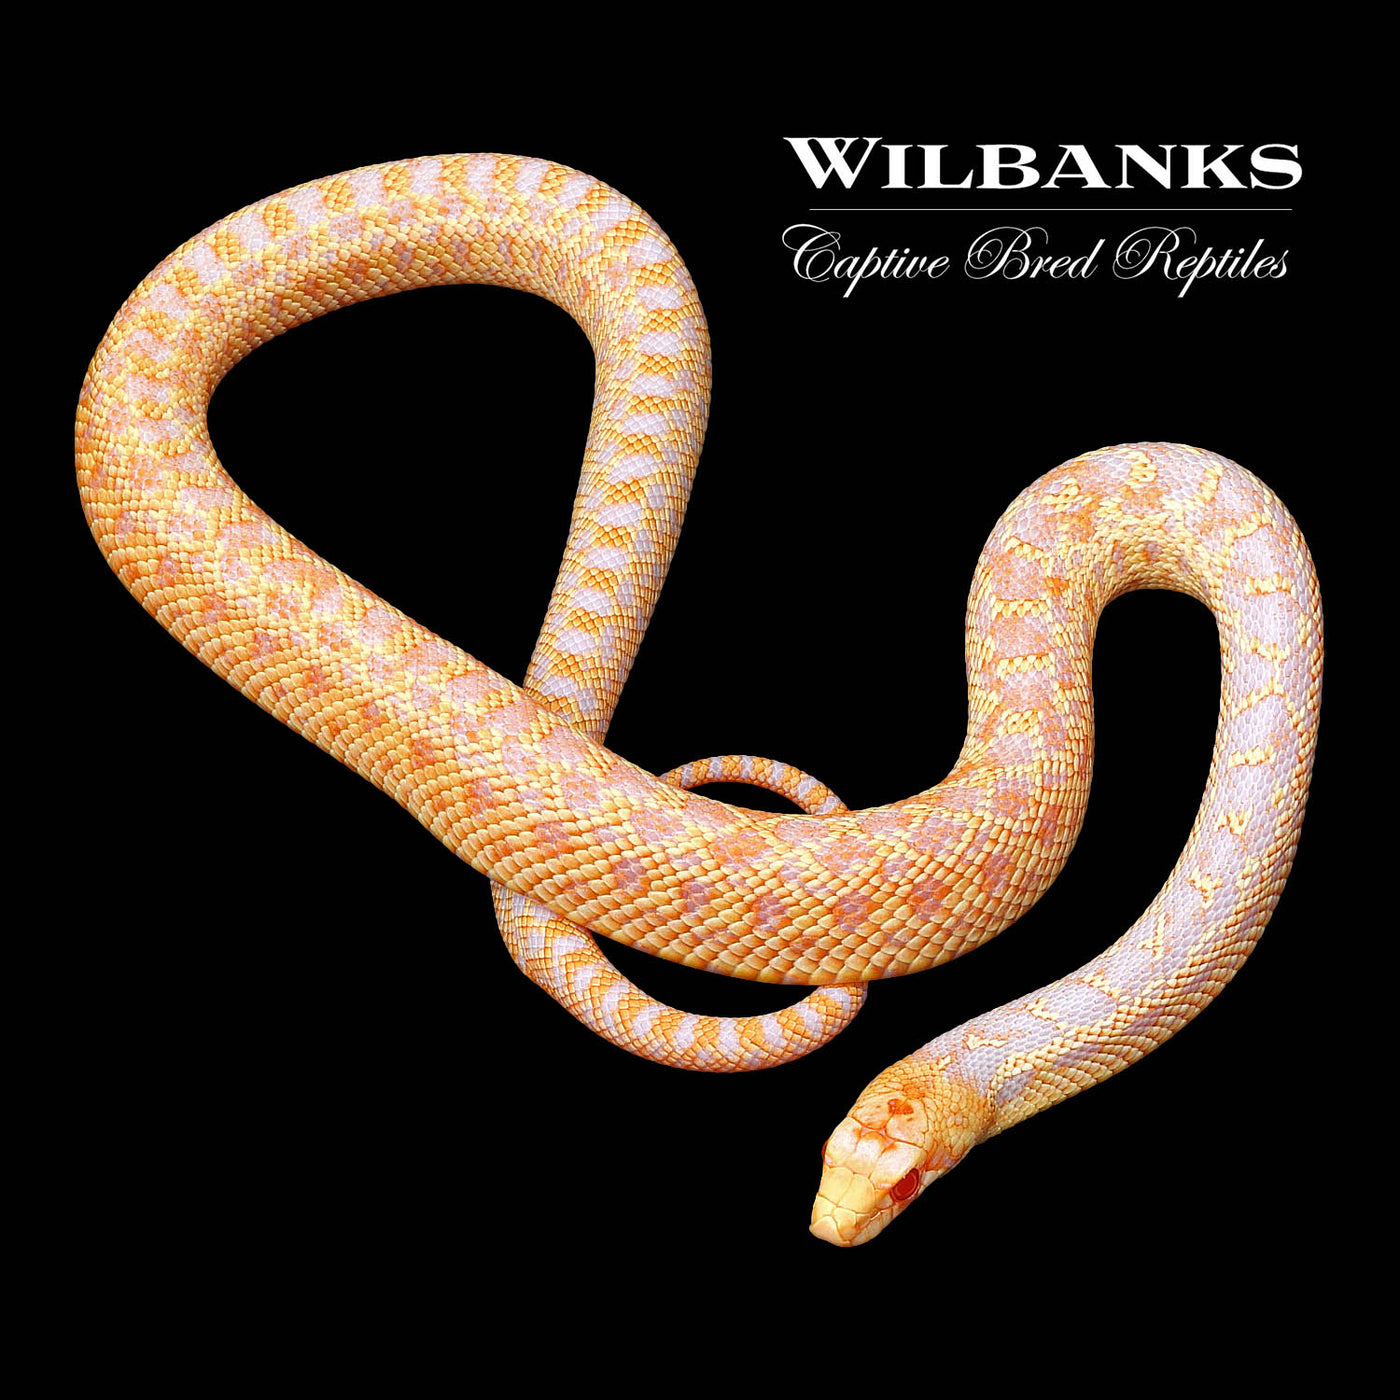 Applegate Albino San Diego Gopher Snake ♂ '22